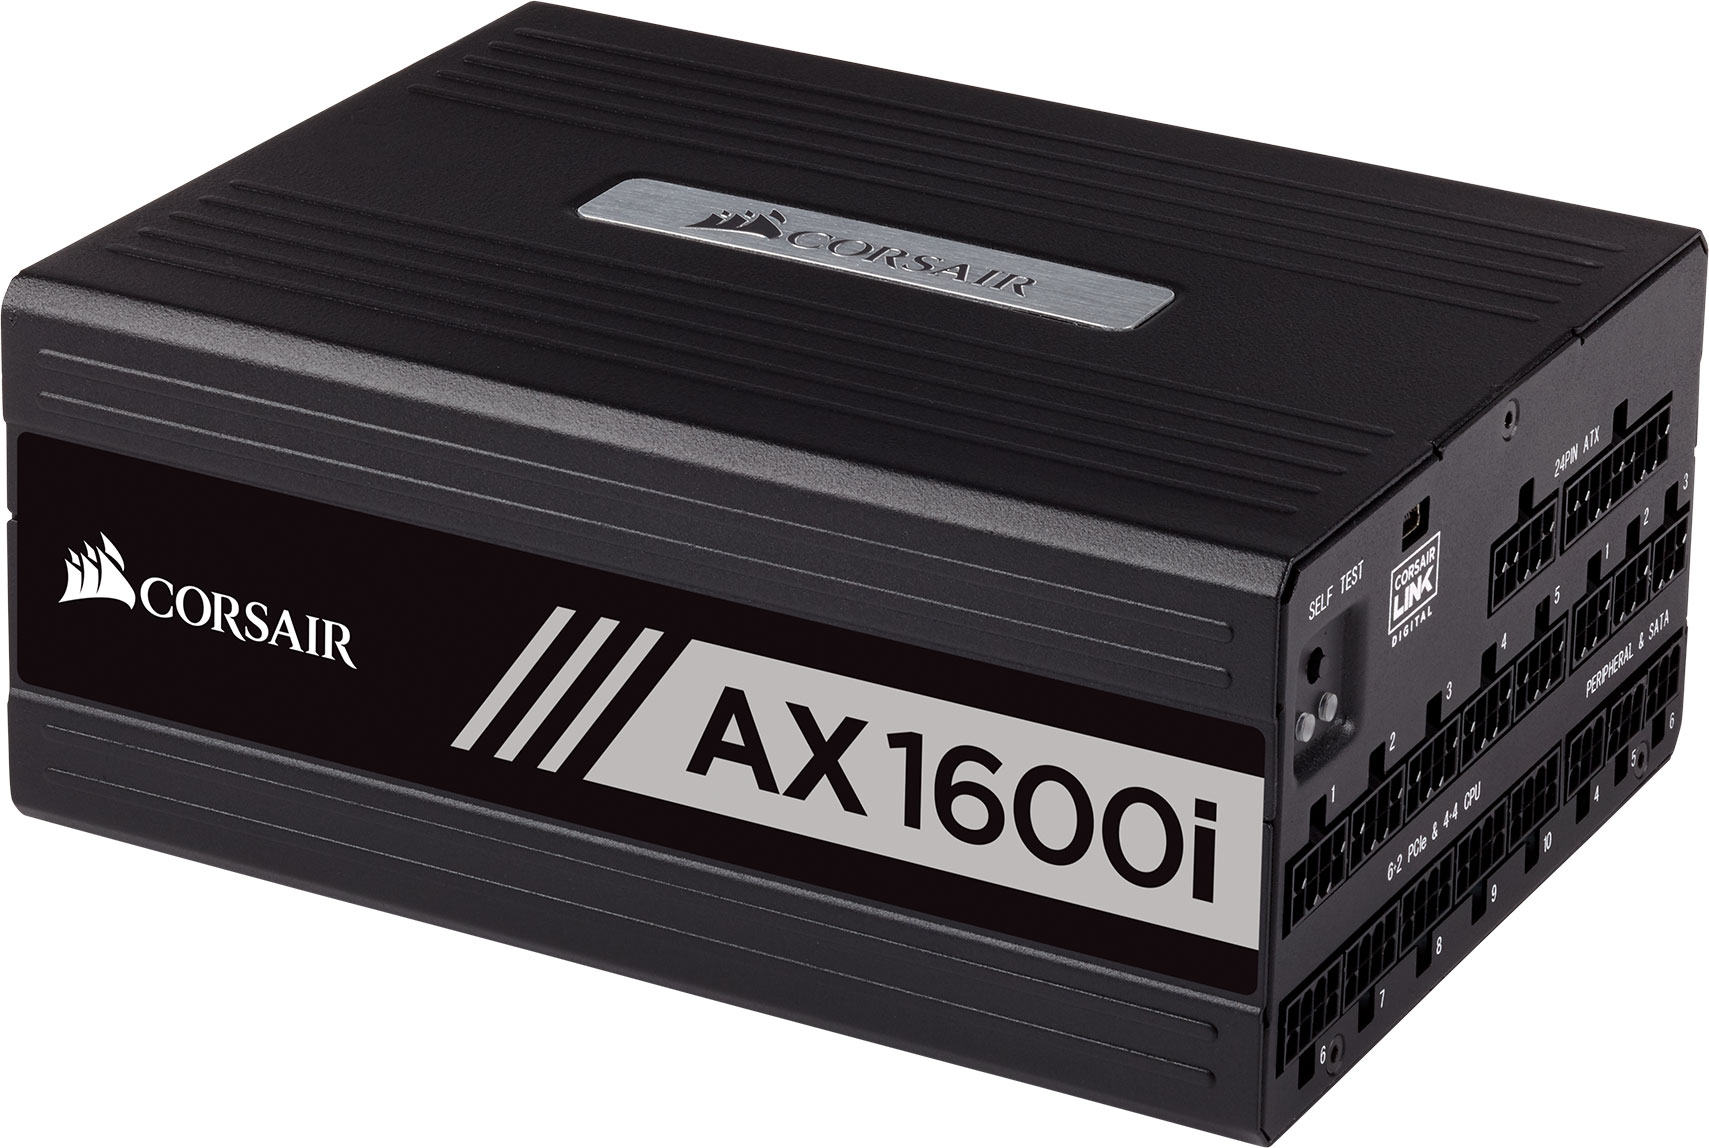 Power Supply: Corsair AX1600i